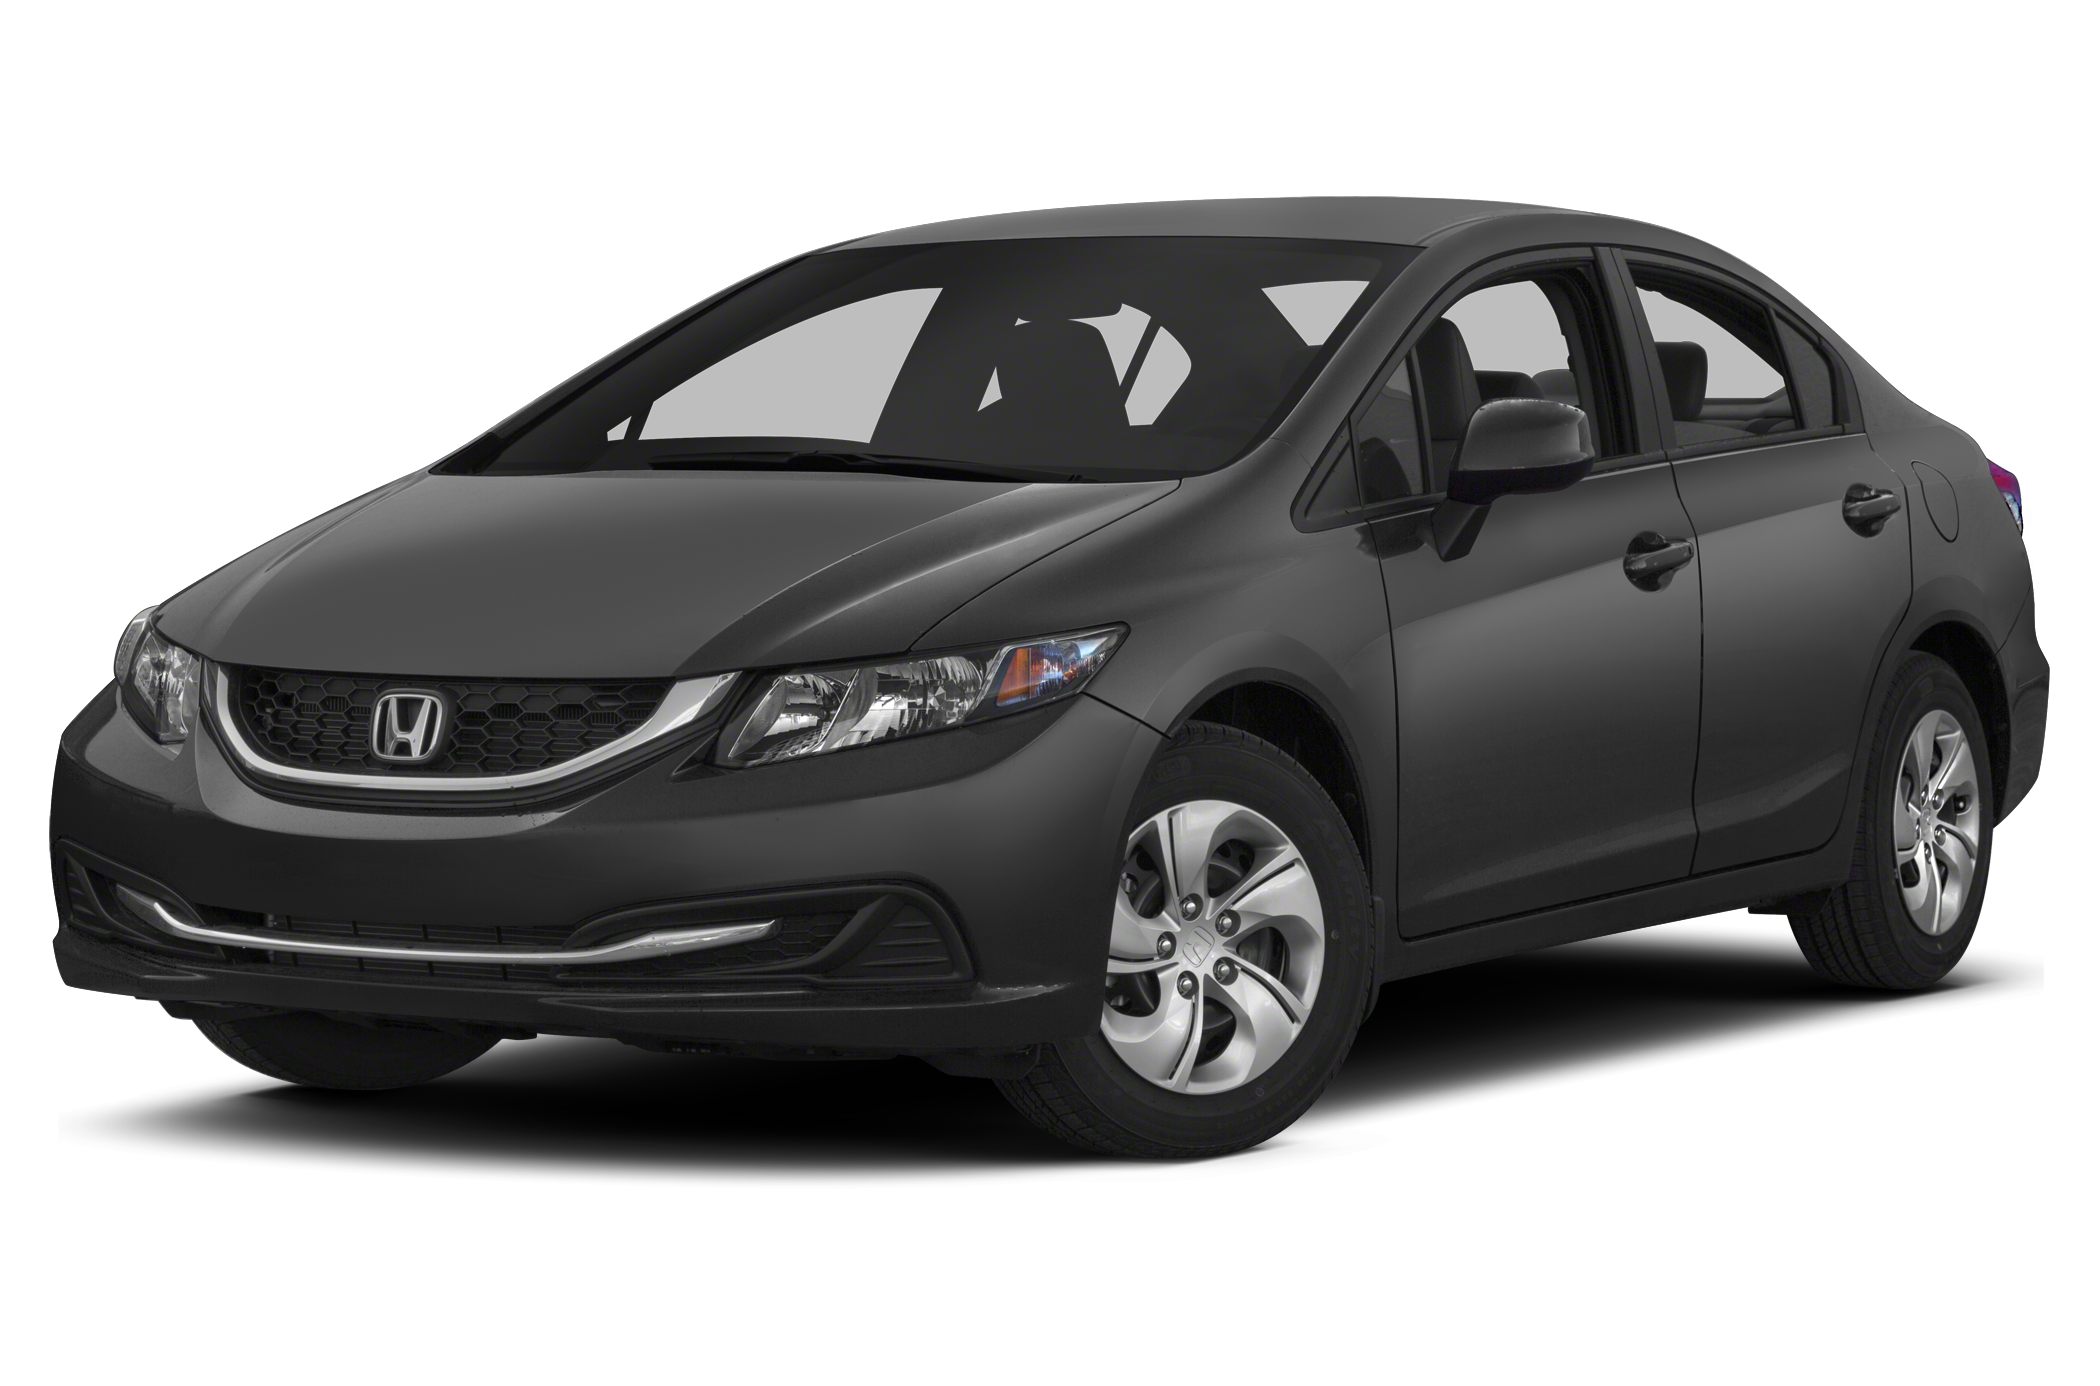 2013 Honda Civic Specs And Prices